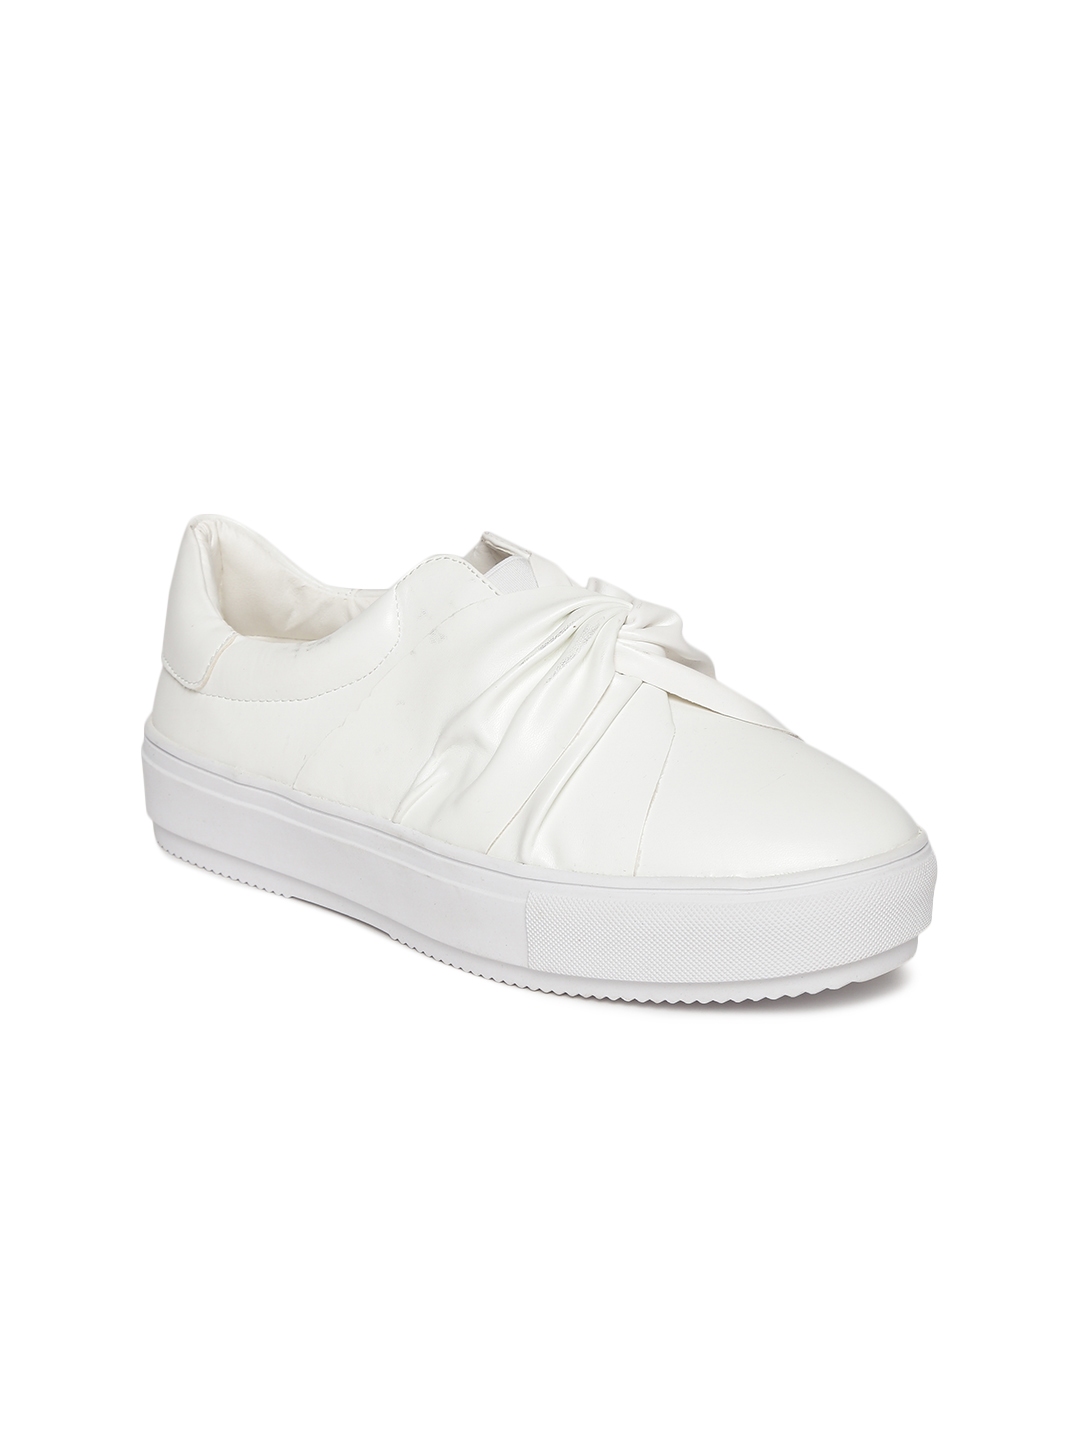 Buy Carlton London Women White Flatform Slip On Sneakers - Casual Shoes ...